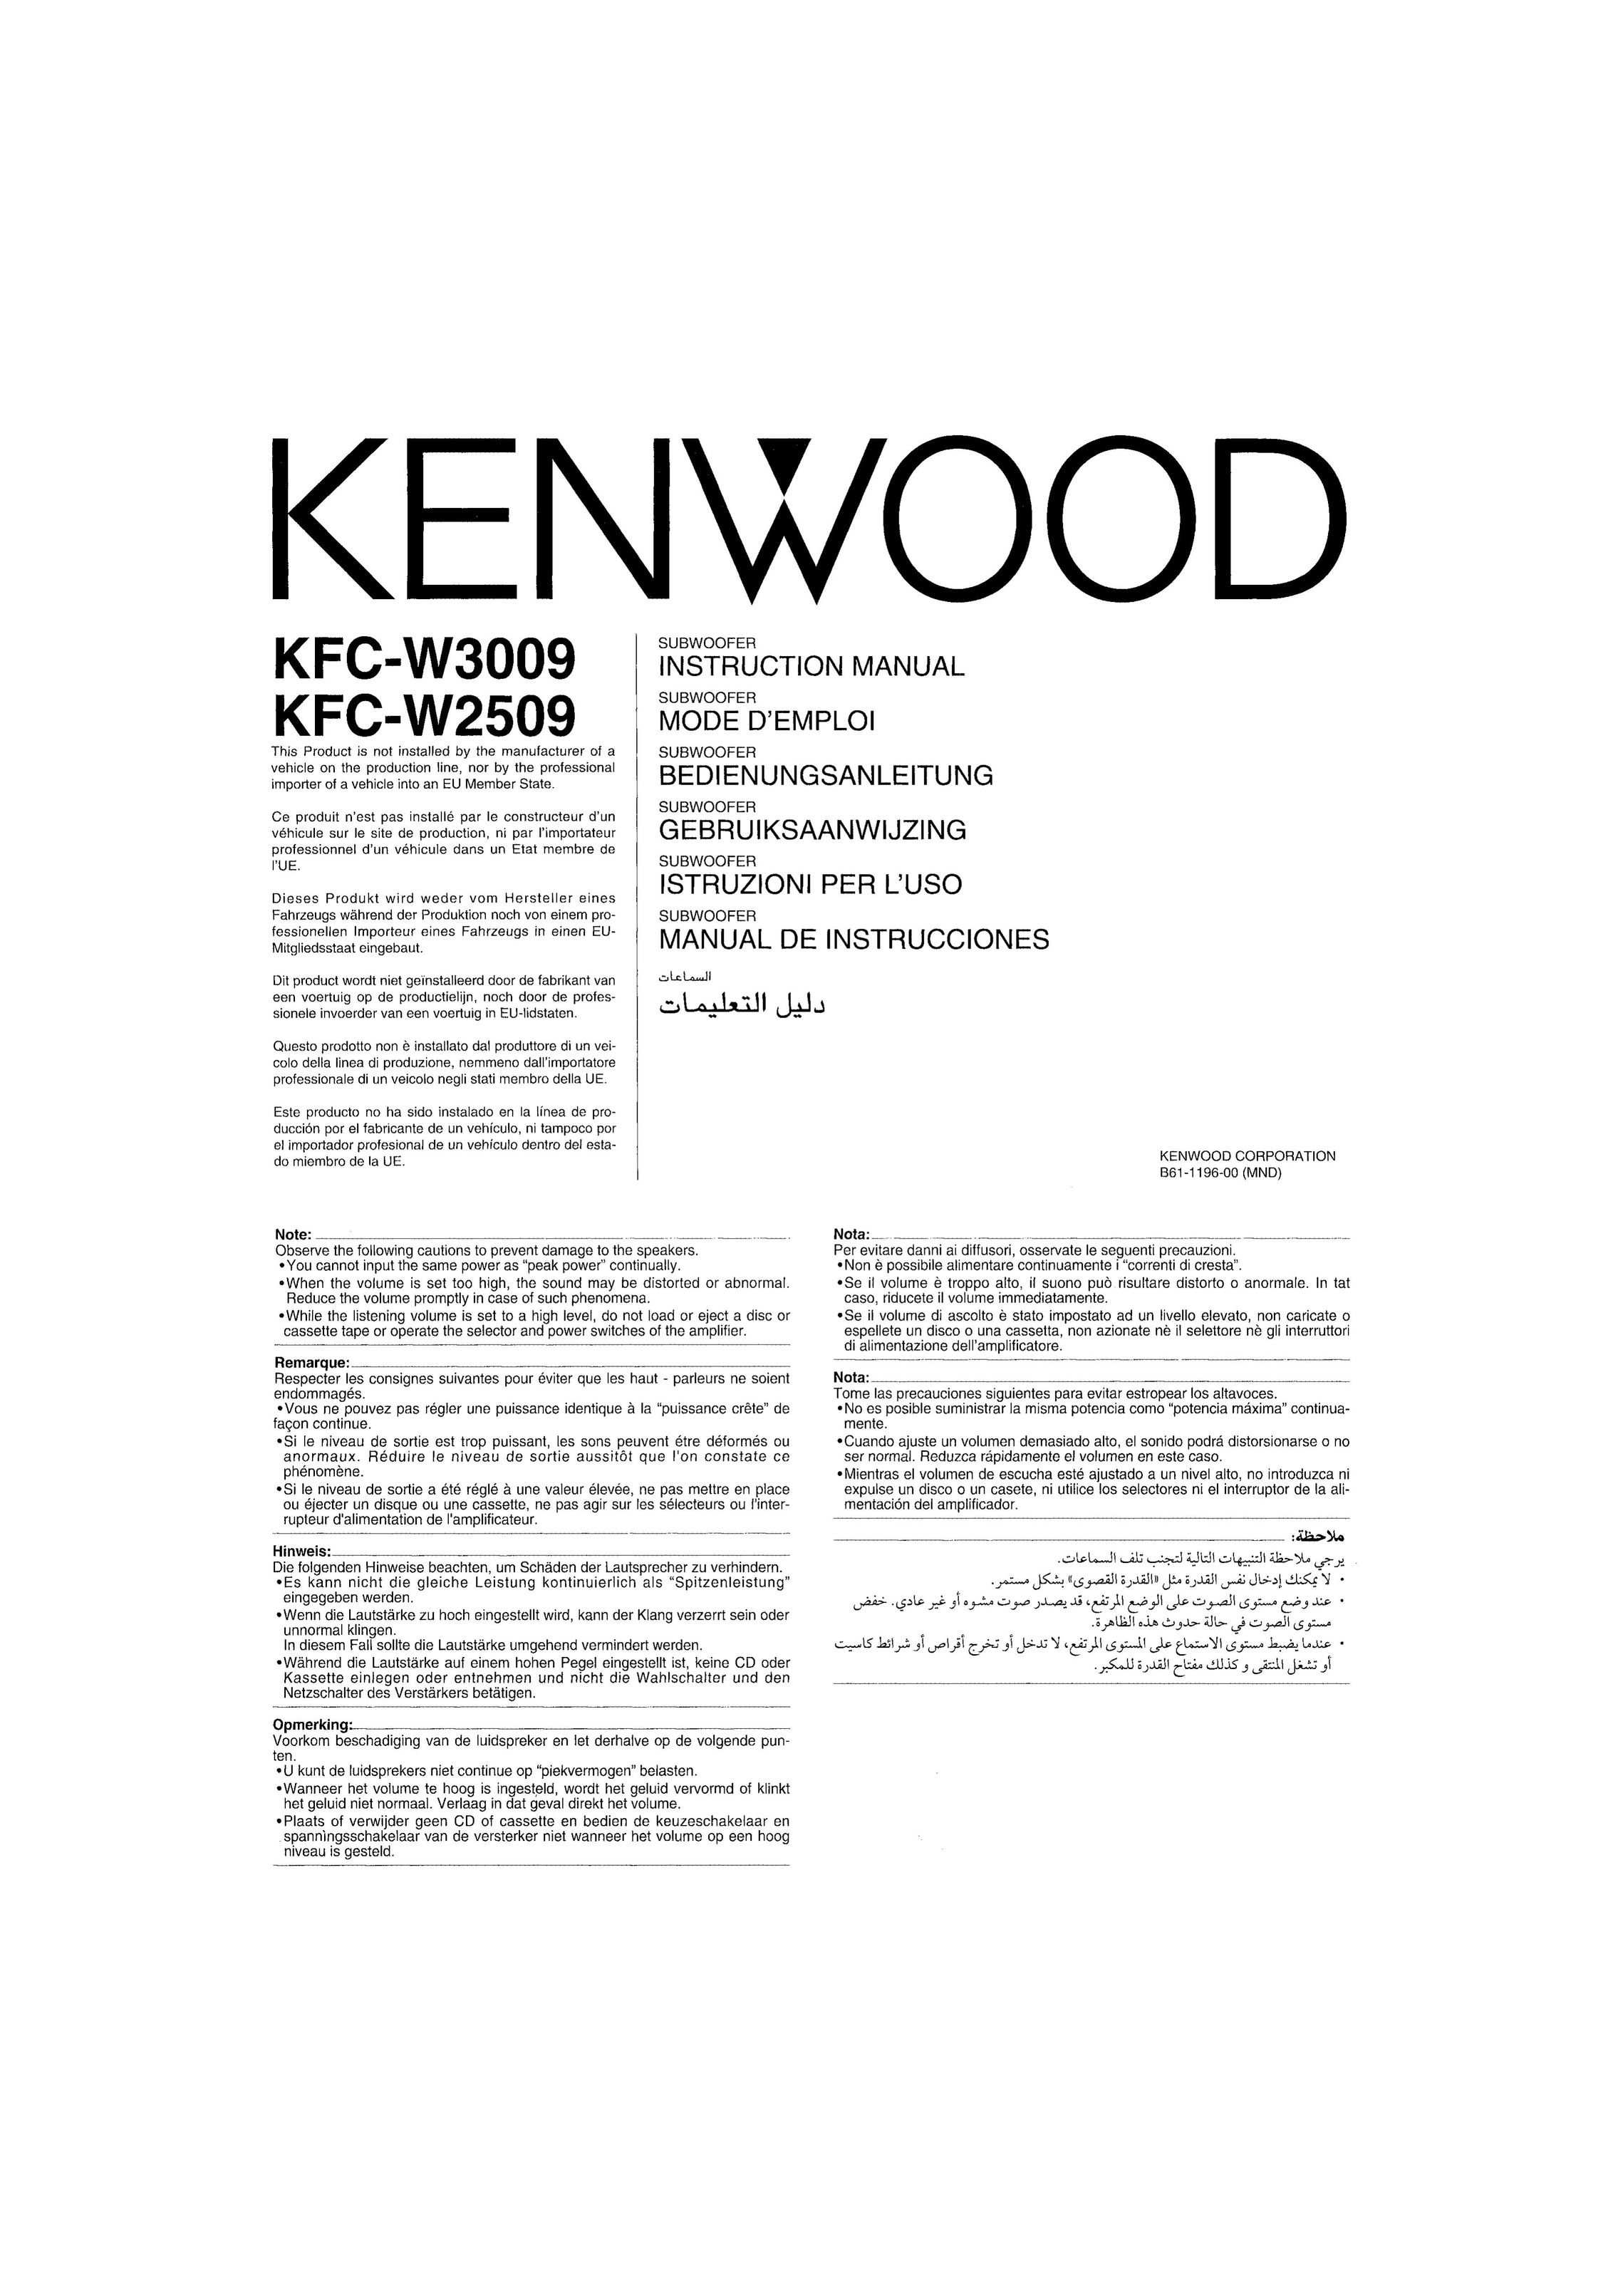 Kenwood KFC-W2509 Speaker User Manual